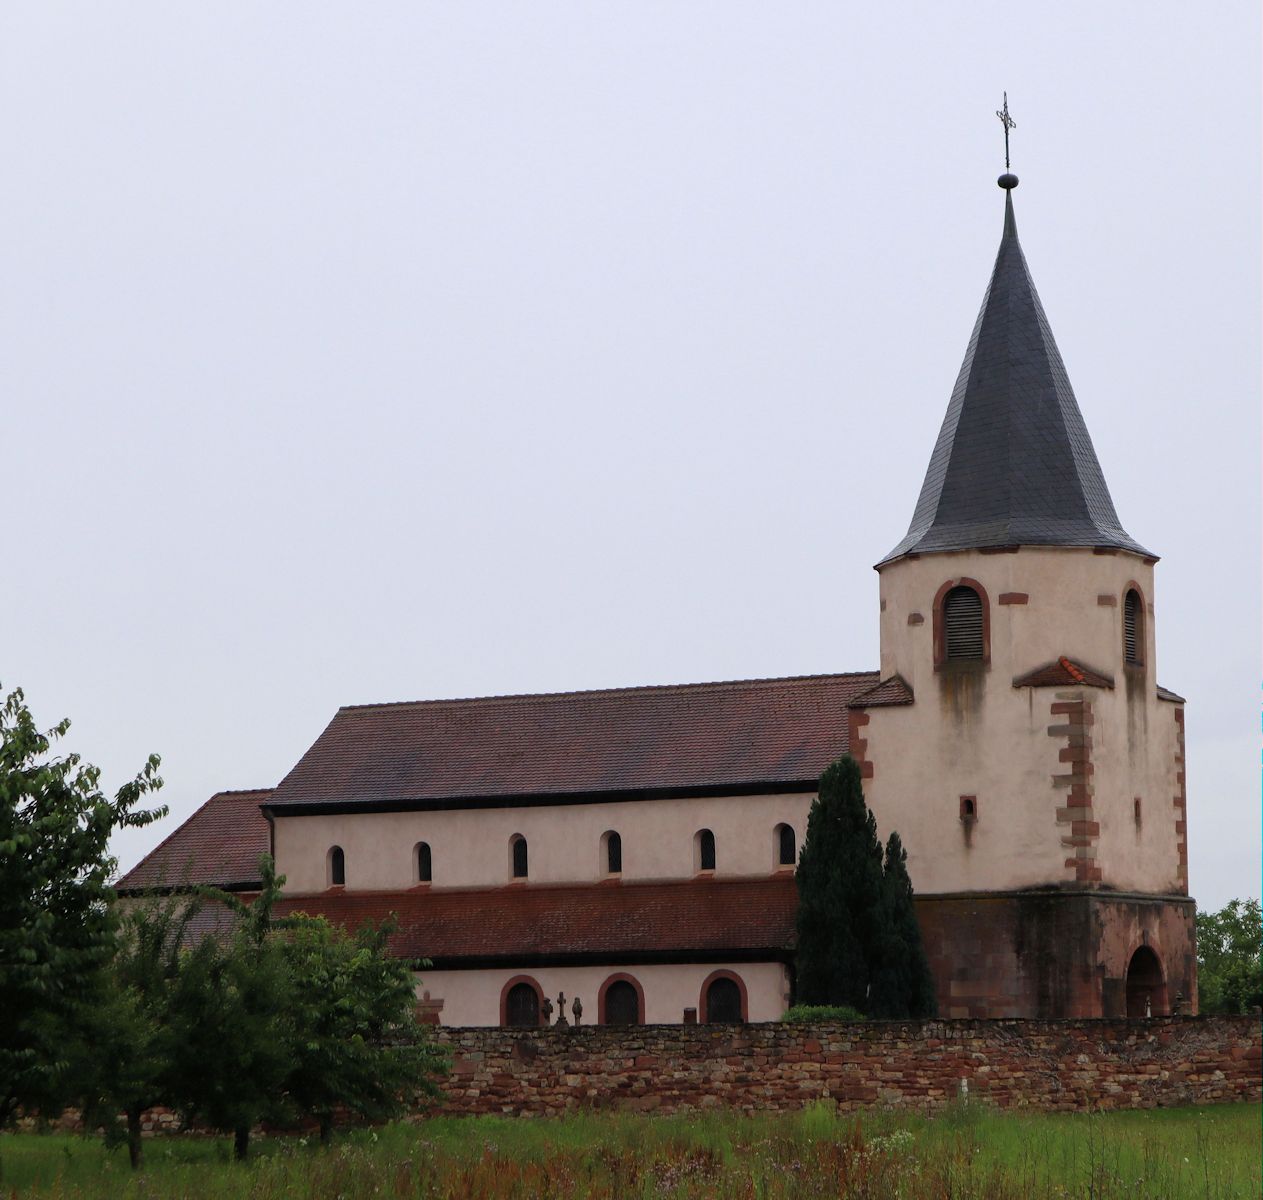 Kirche Dompeter nahe Avolsheim, die im Kern älteste Kirche des Elsass aus dem 6./7. Jahrhundert